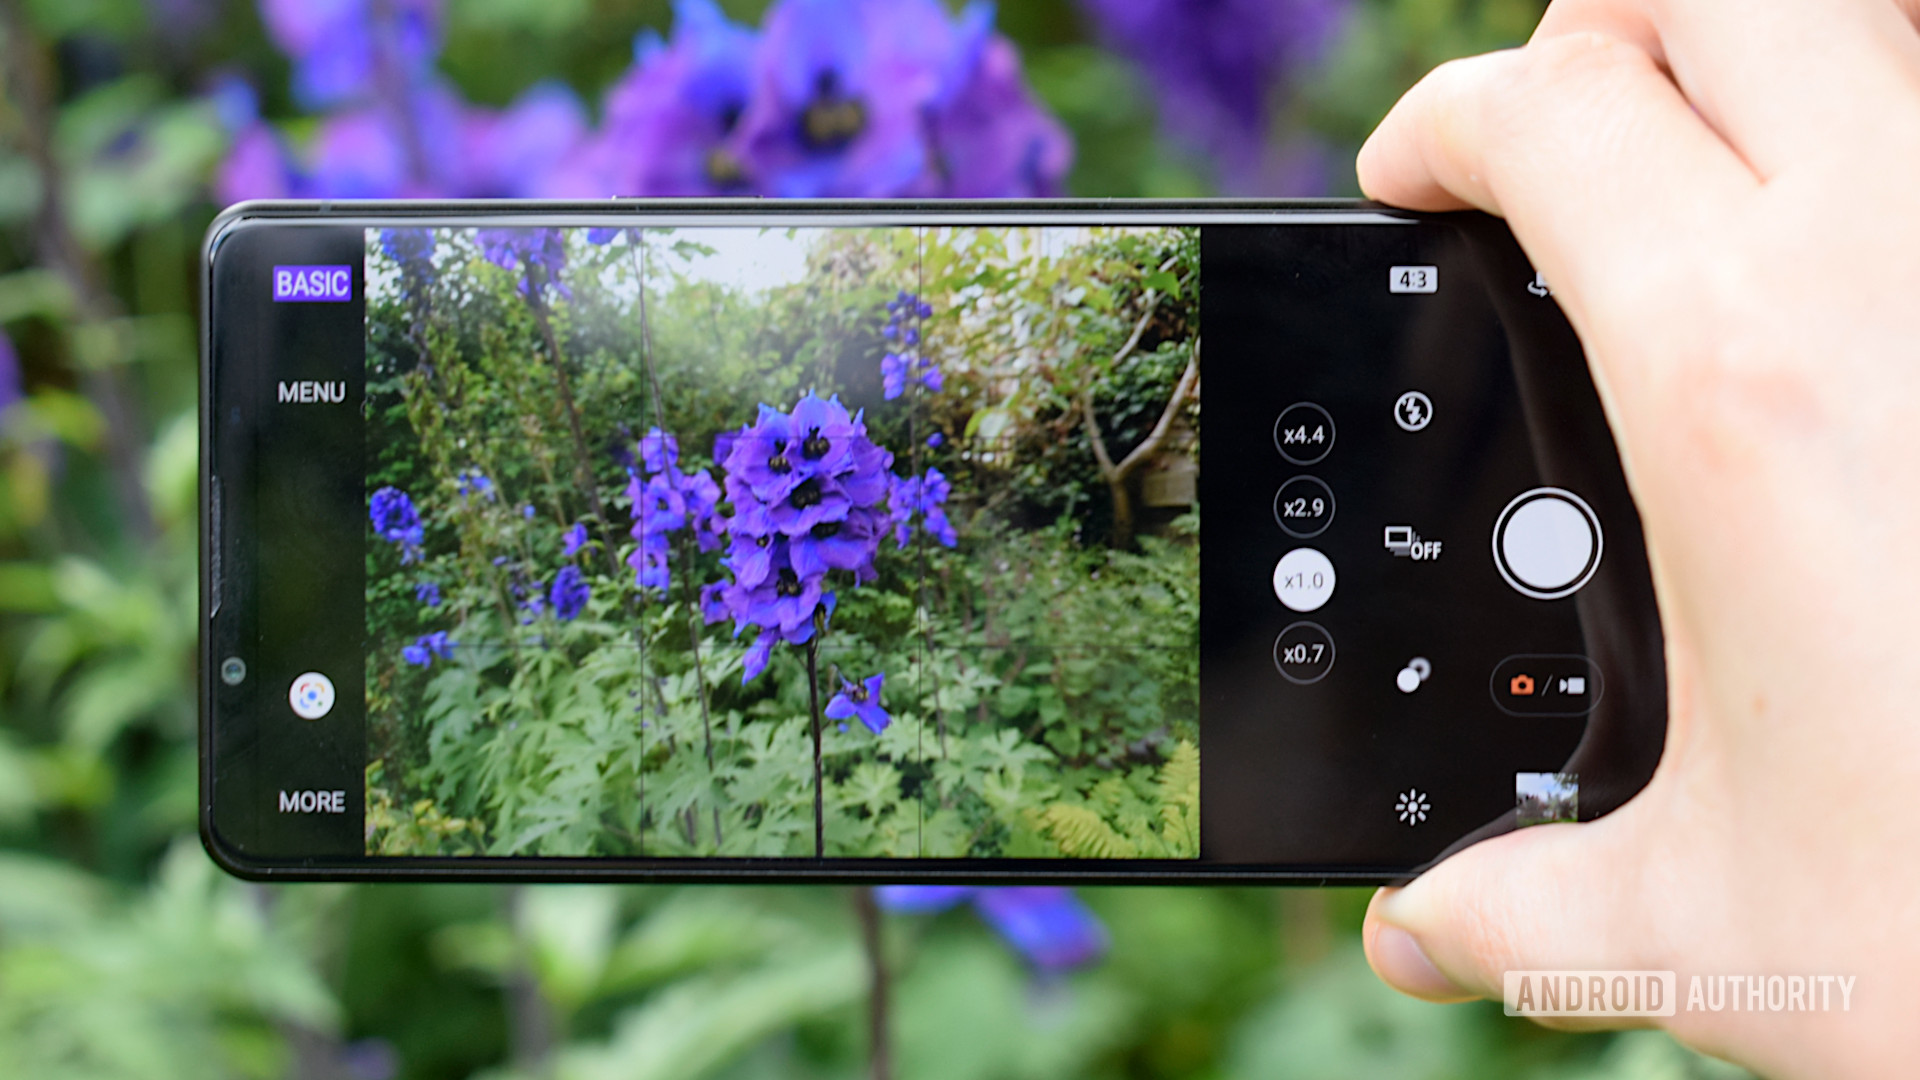 Sony Xperia 1 III camera app taking a photo of a purple flower